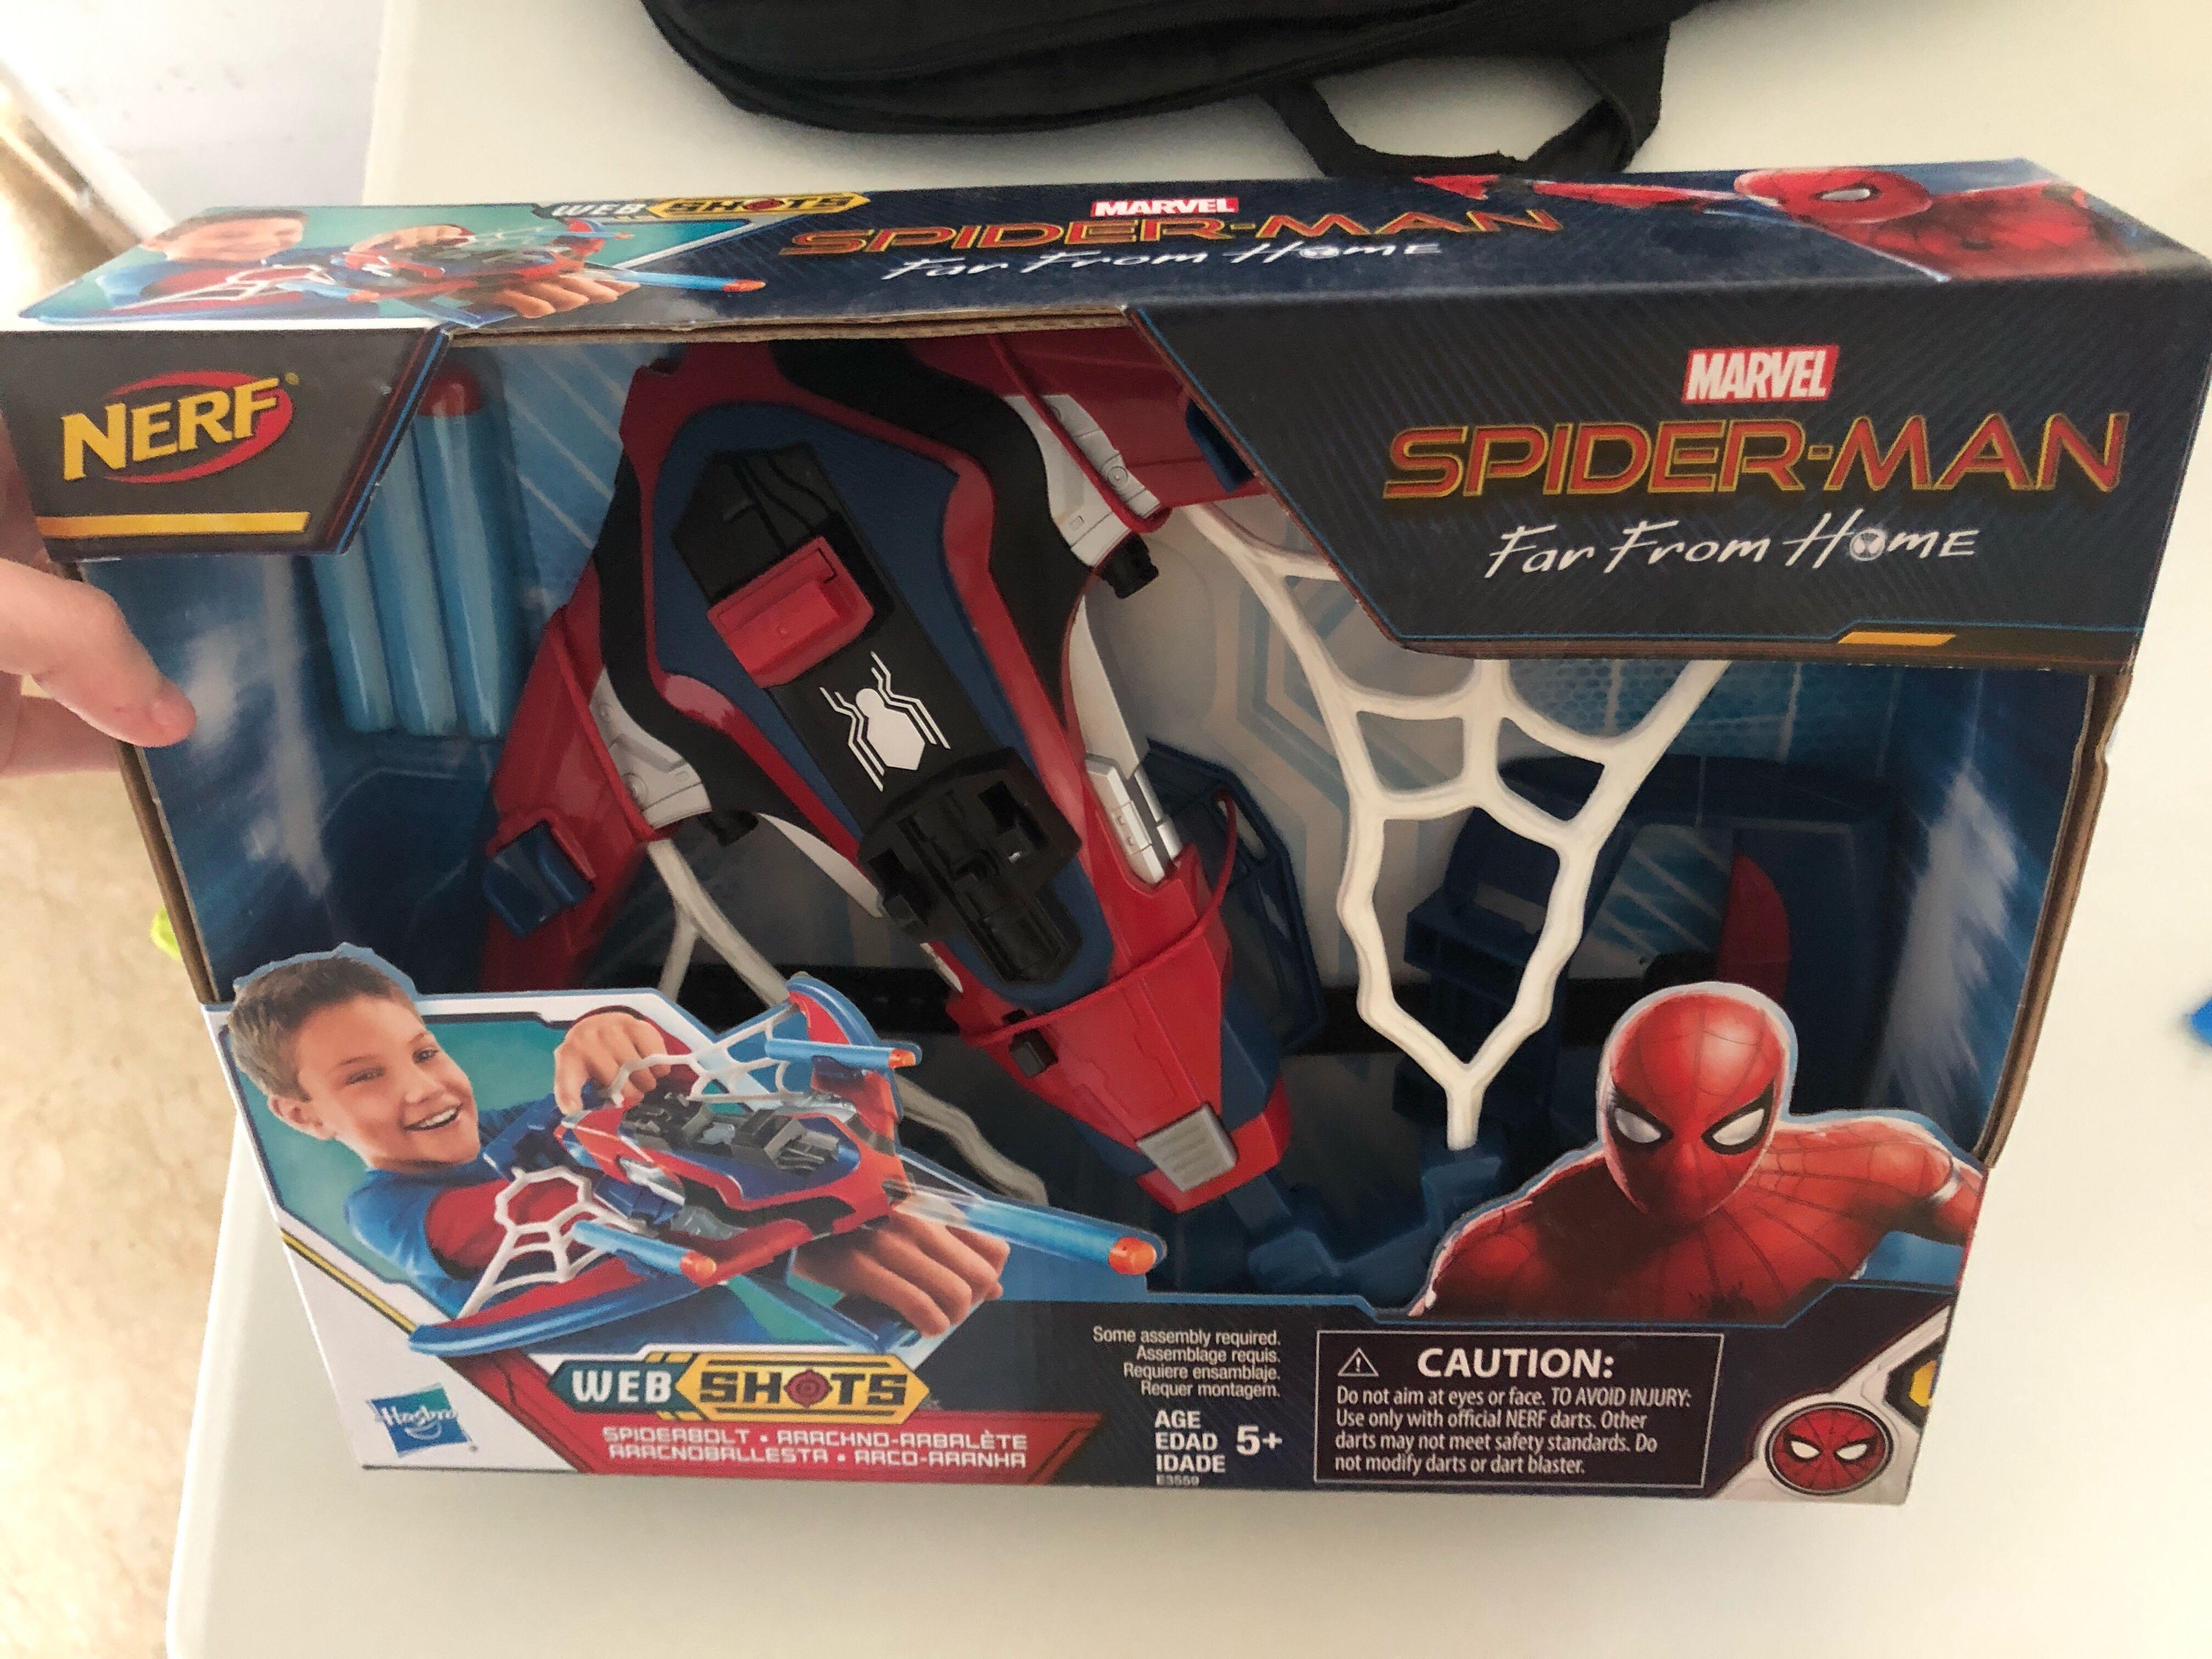  Marvel Spider-Man Web Shots Spiderbolt NERF Powered